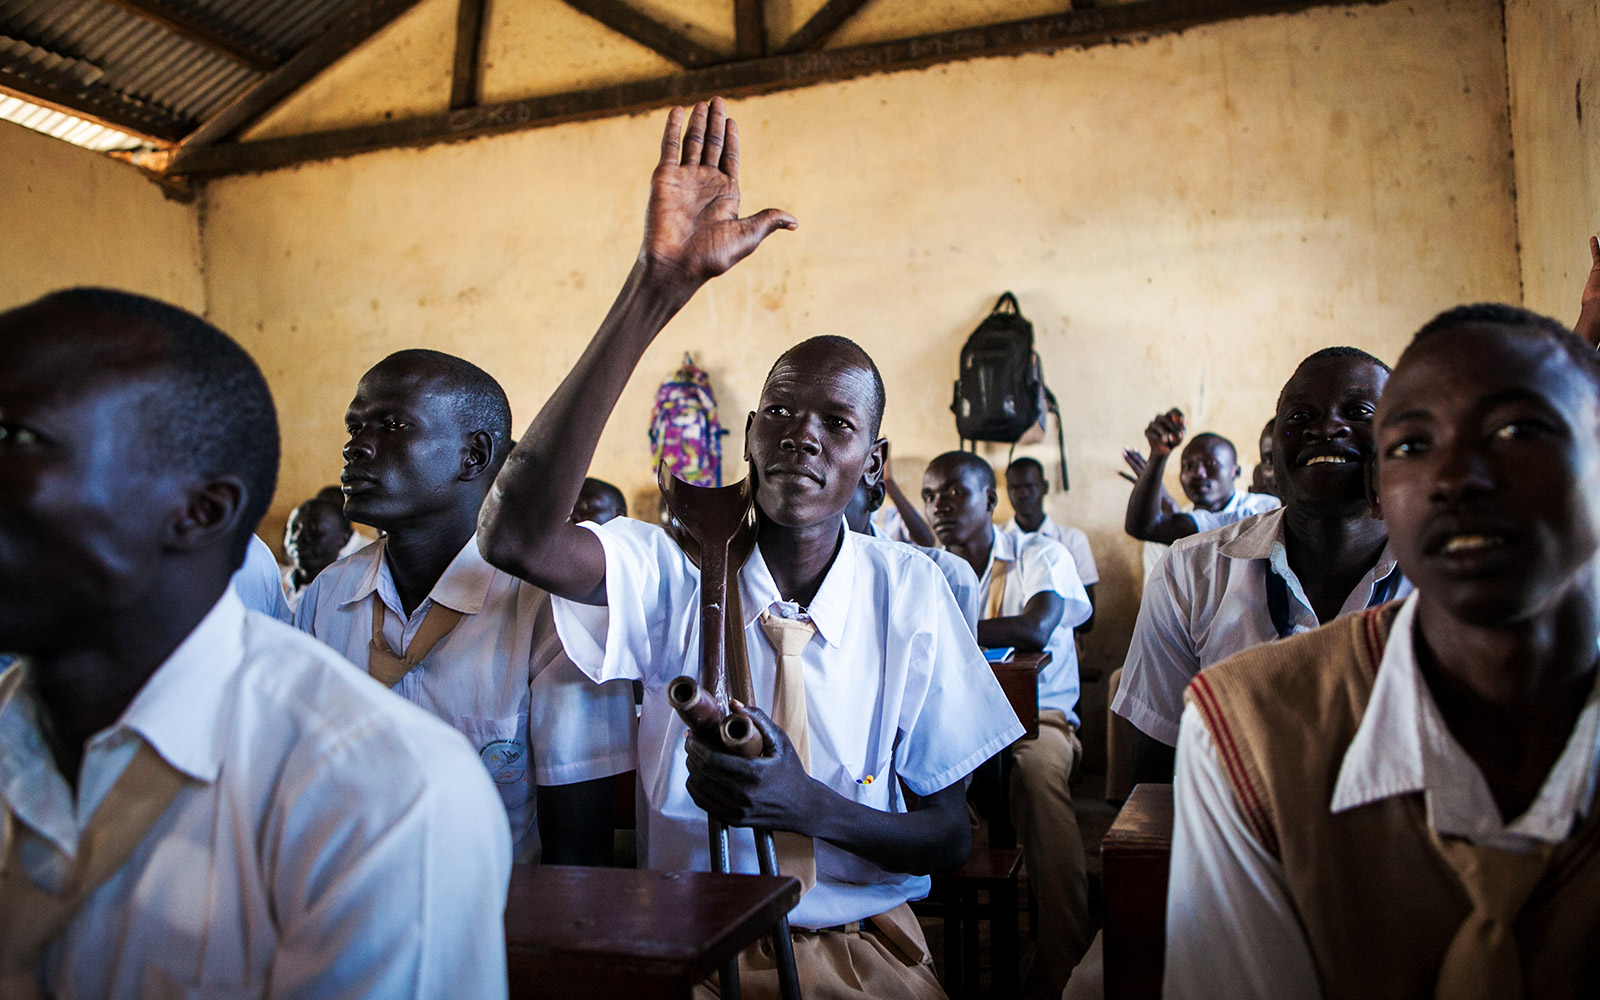 Kenya, Dak, south sudanese, attending classes at Bantu School in the Kakuma refugee camp.